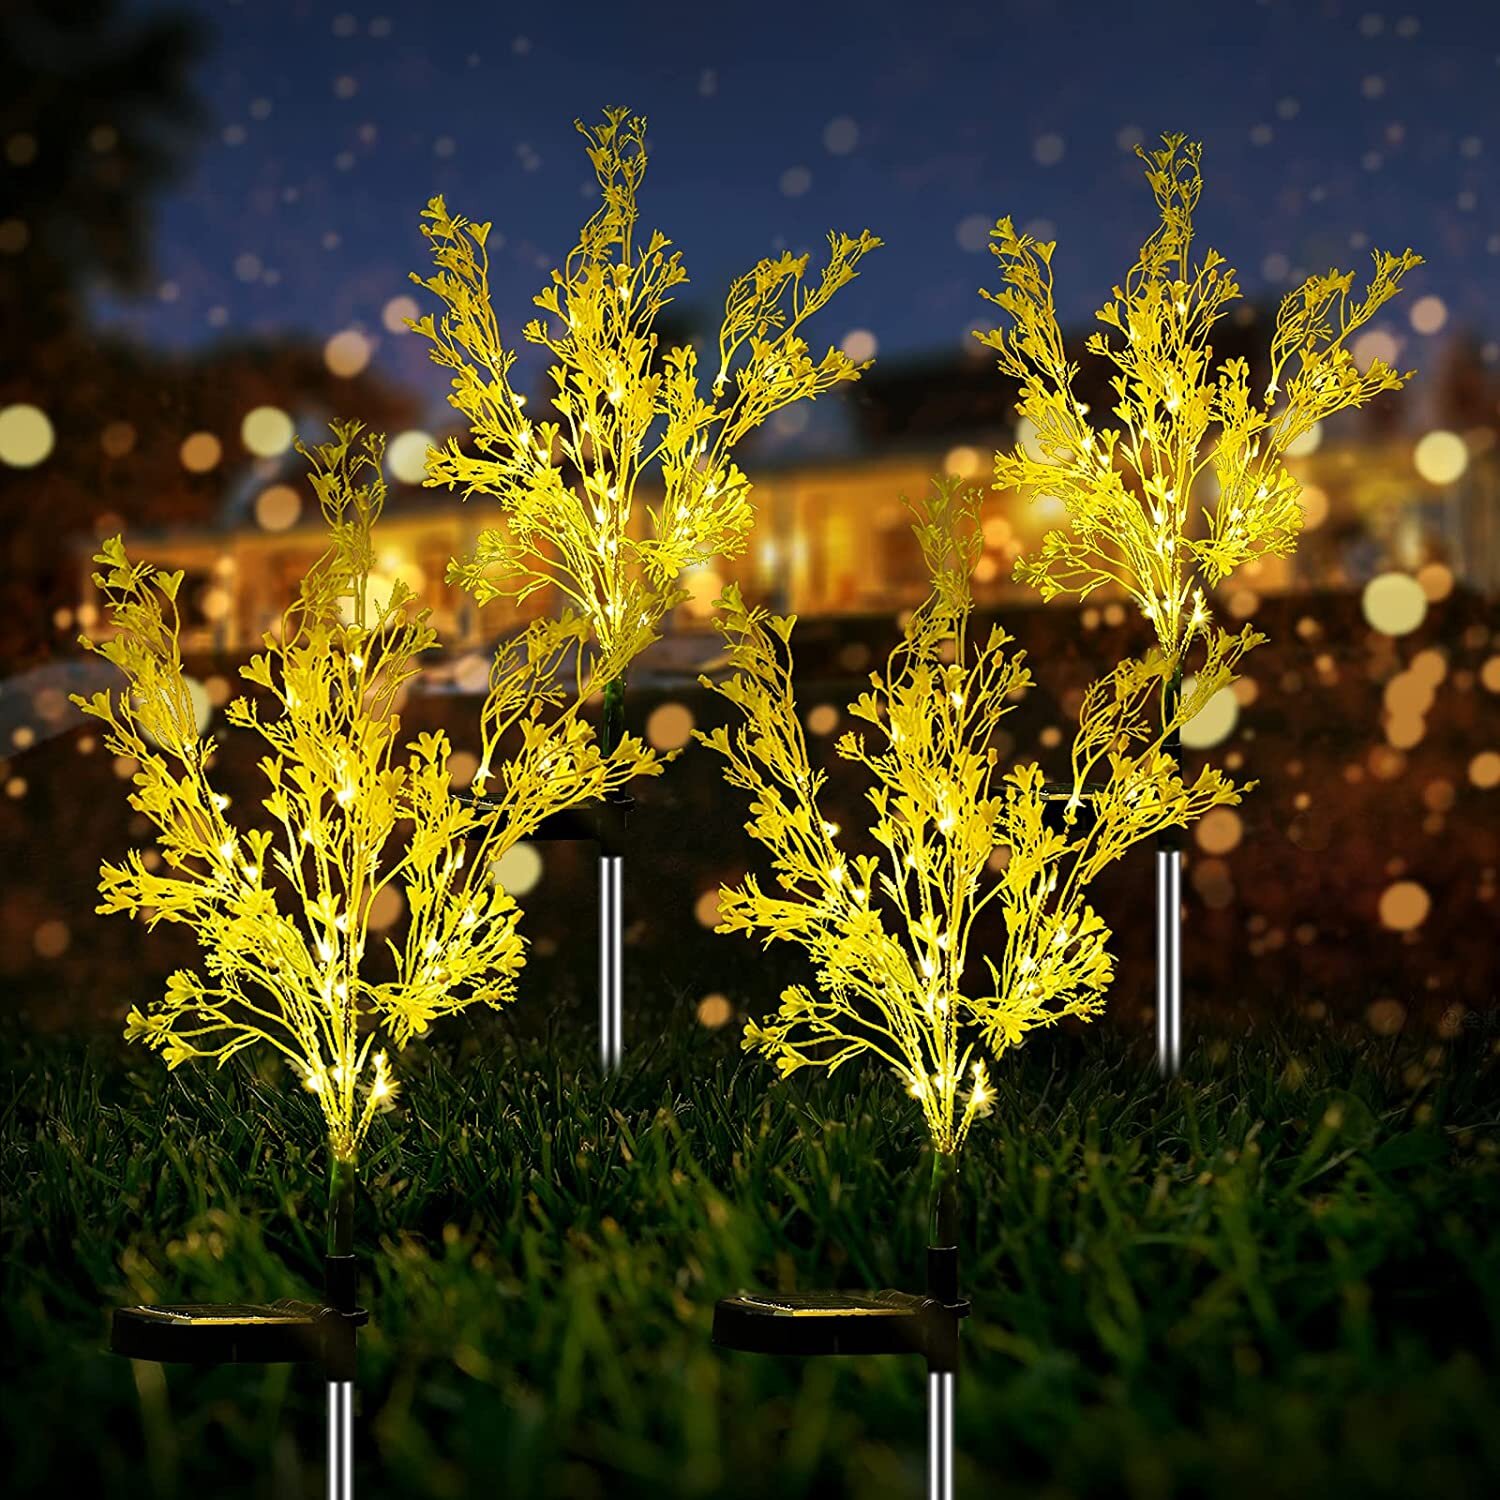 LED Solar Flower Light Waterproof Garden Landscape Lamp Outdoor